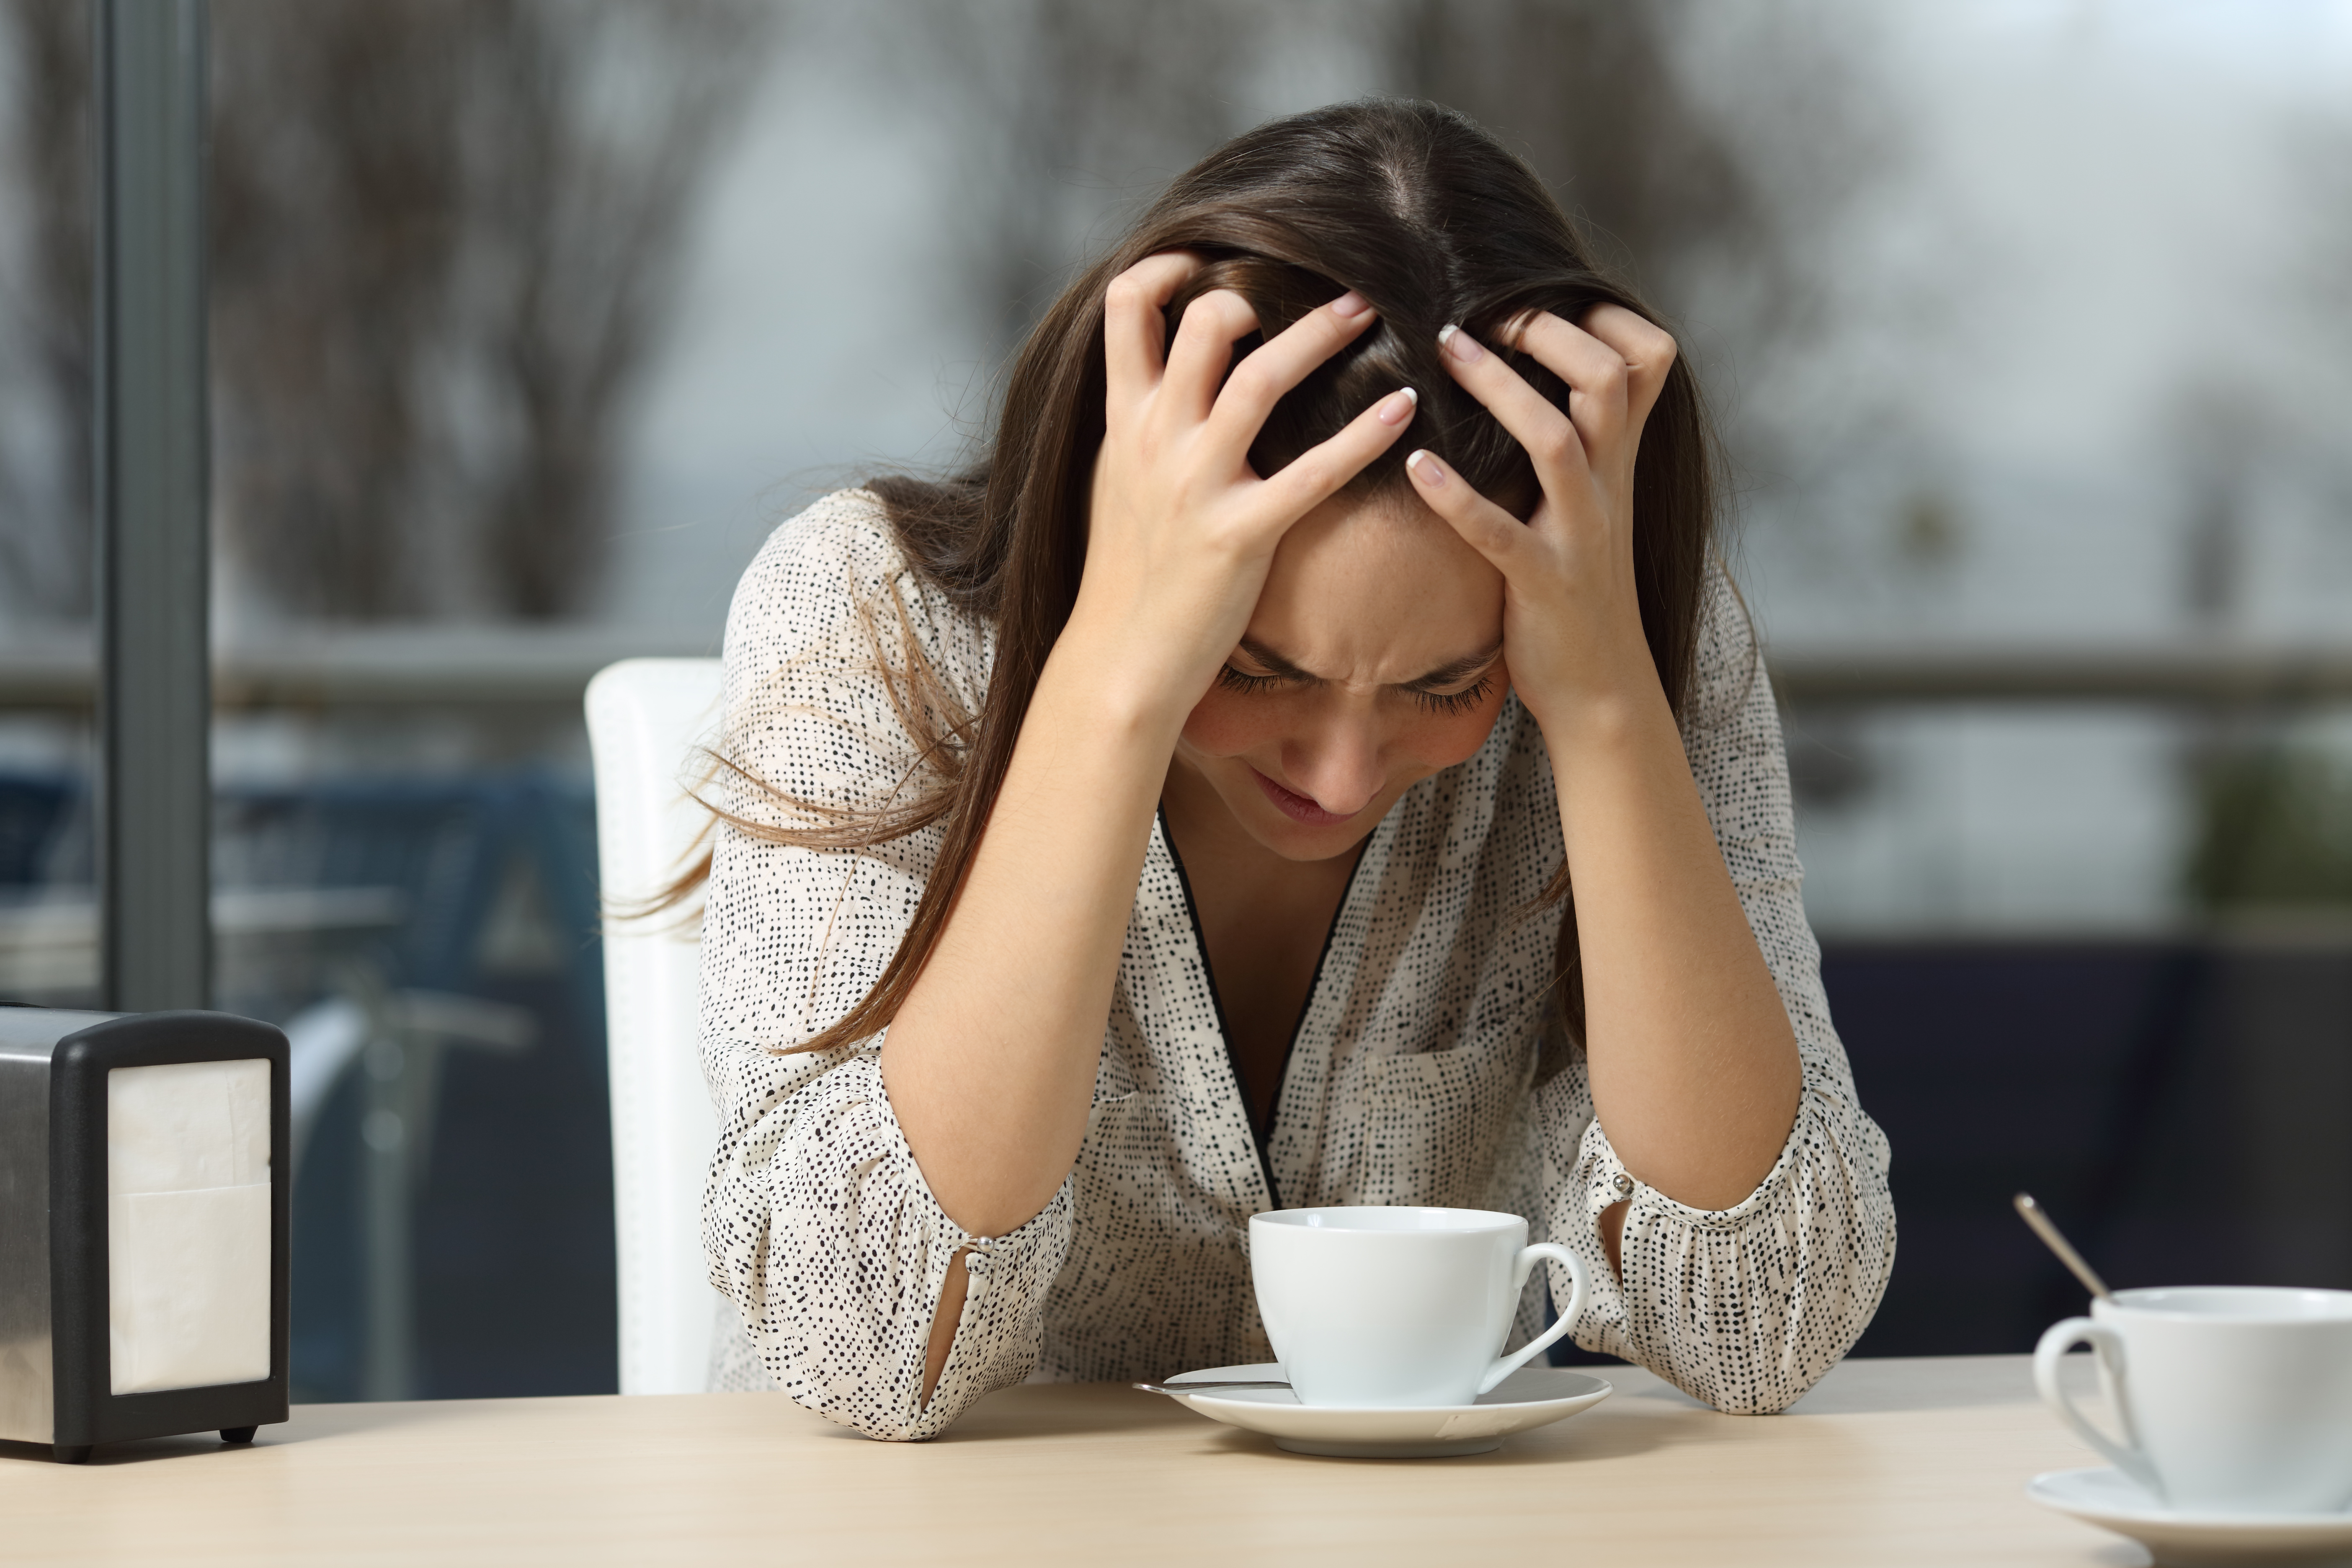 Depressed woman sitting alone in a café | Source: Shutterstock